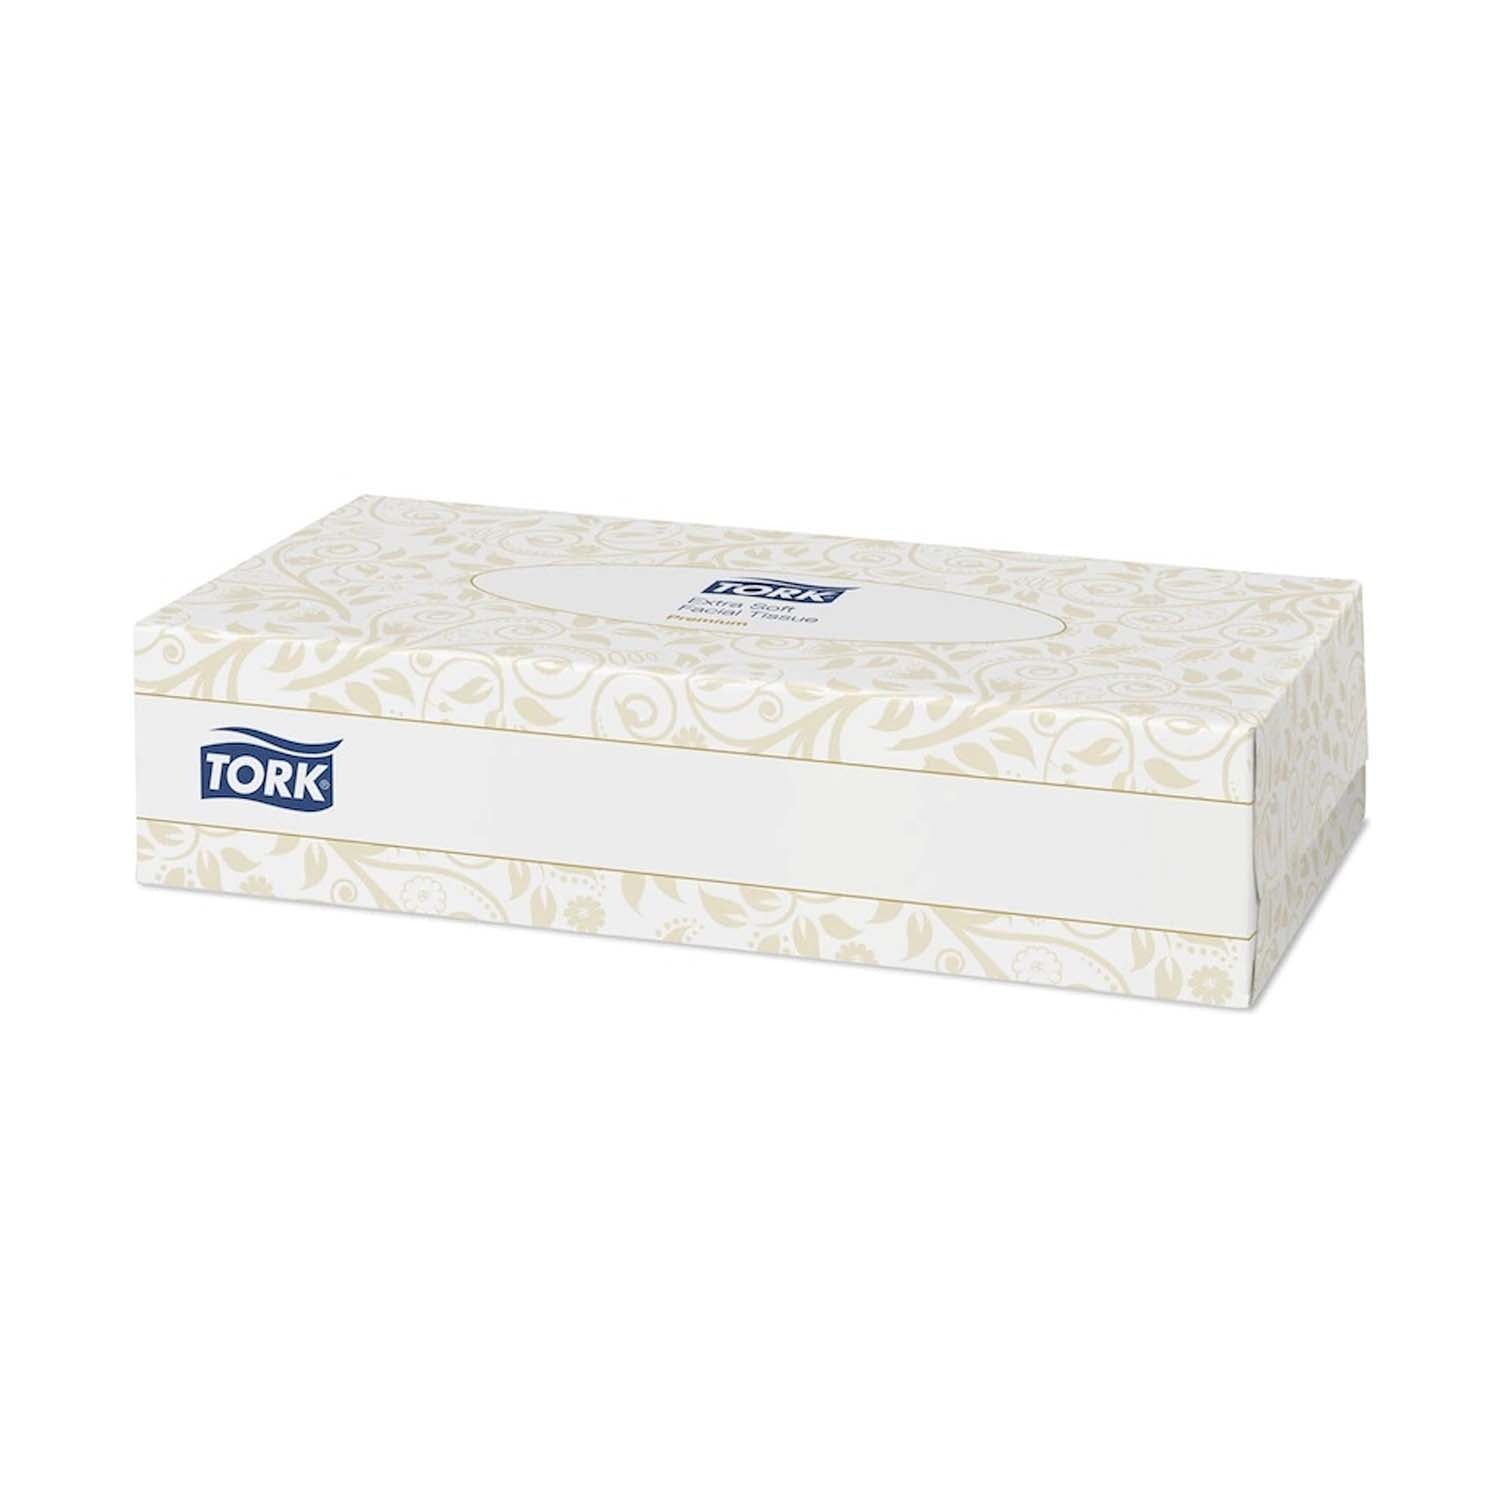 Tork Extra Soft Facial Tissues | 2ply | White | 100 Tissues P/Box | x1 Box